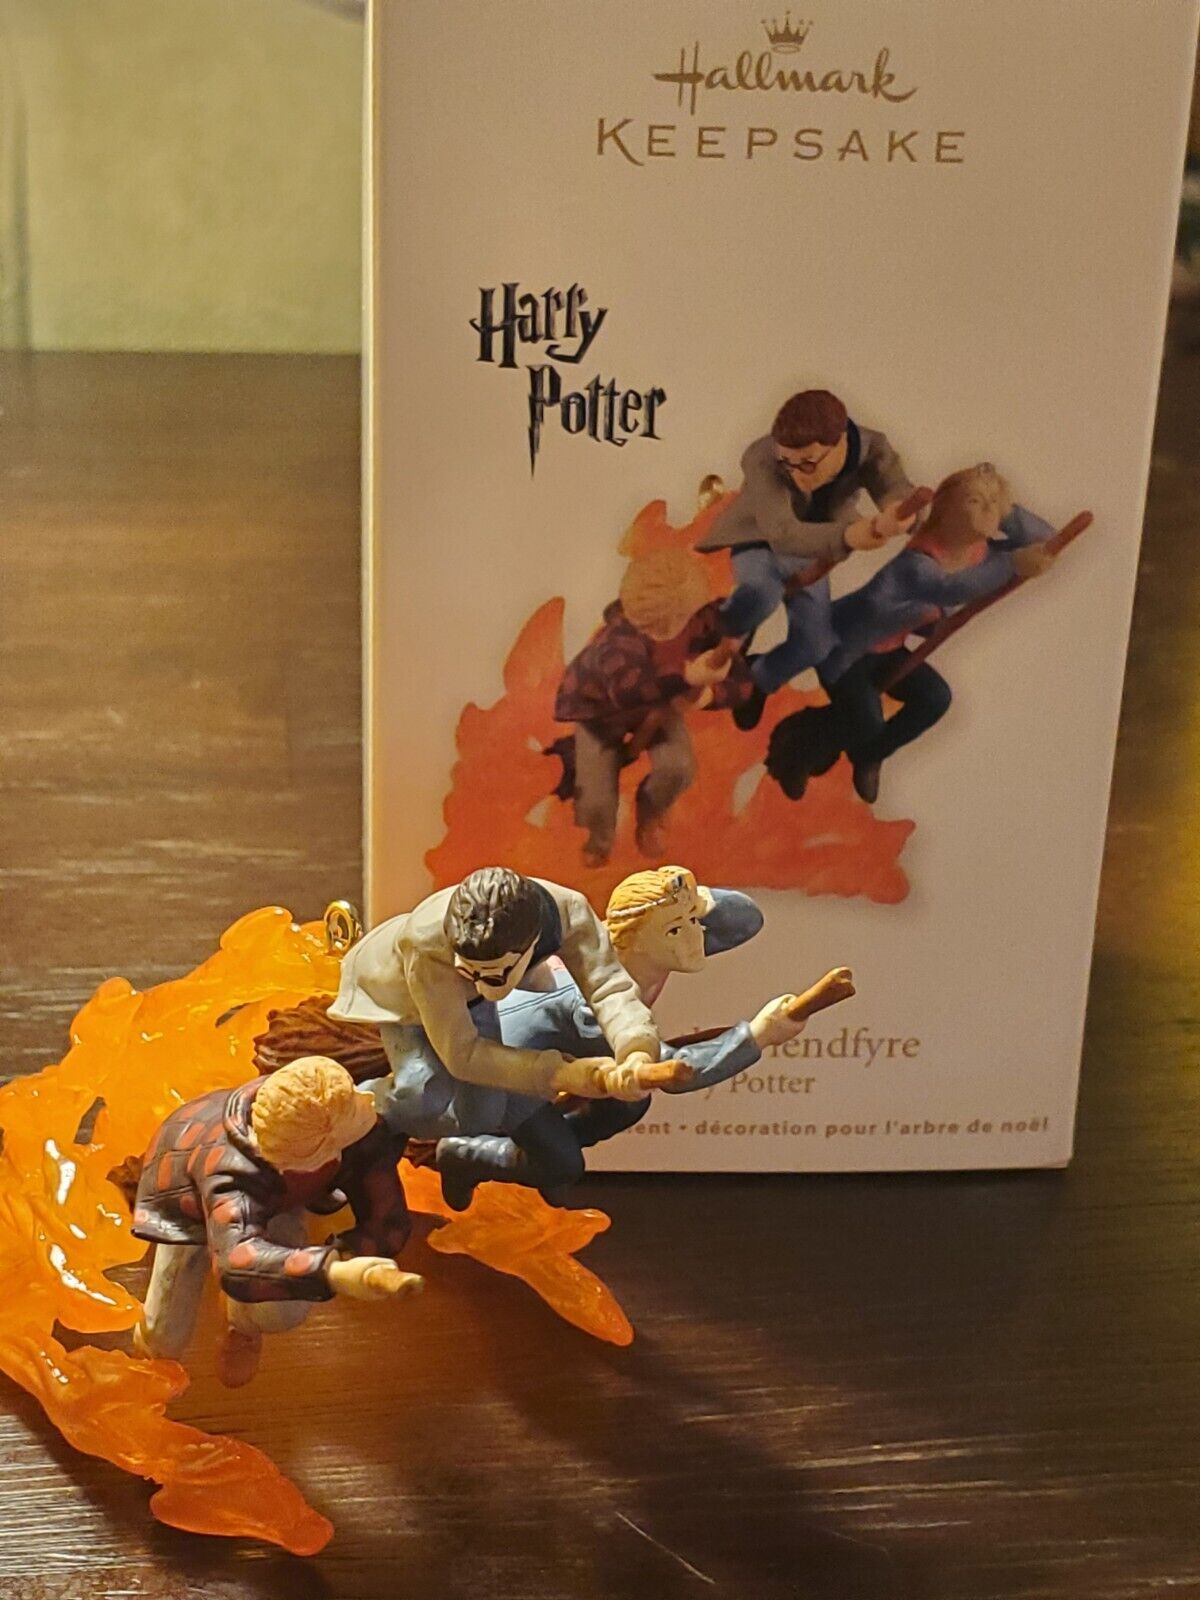 Hallmark Keepsake Harry Potter Ornament - Fleeing the Fiendfyre - Christmas